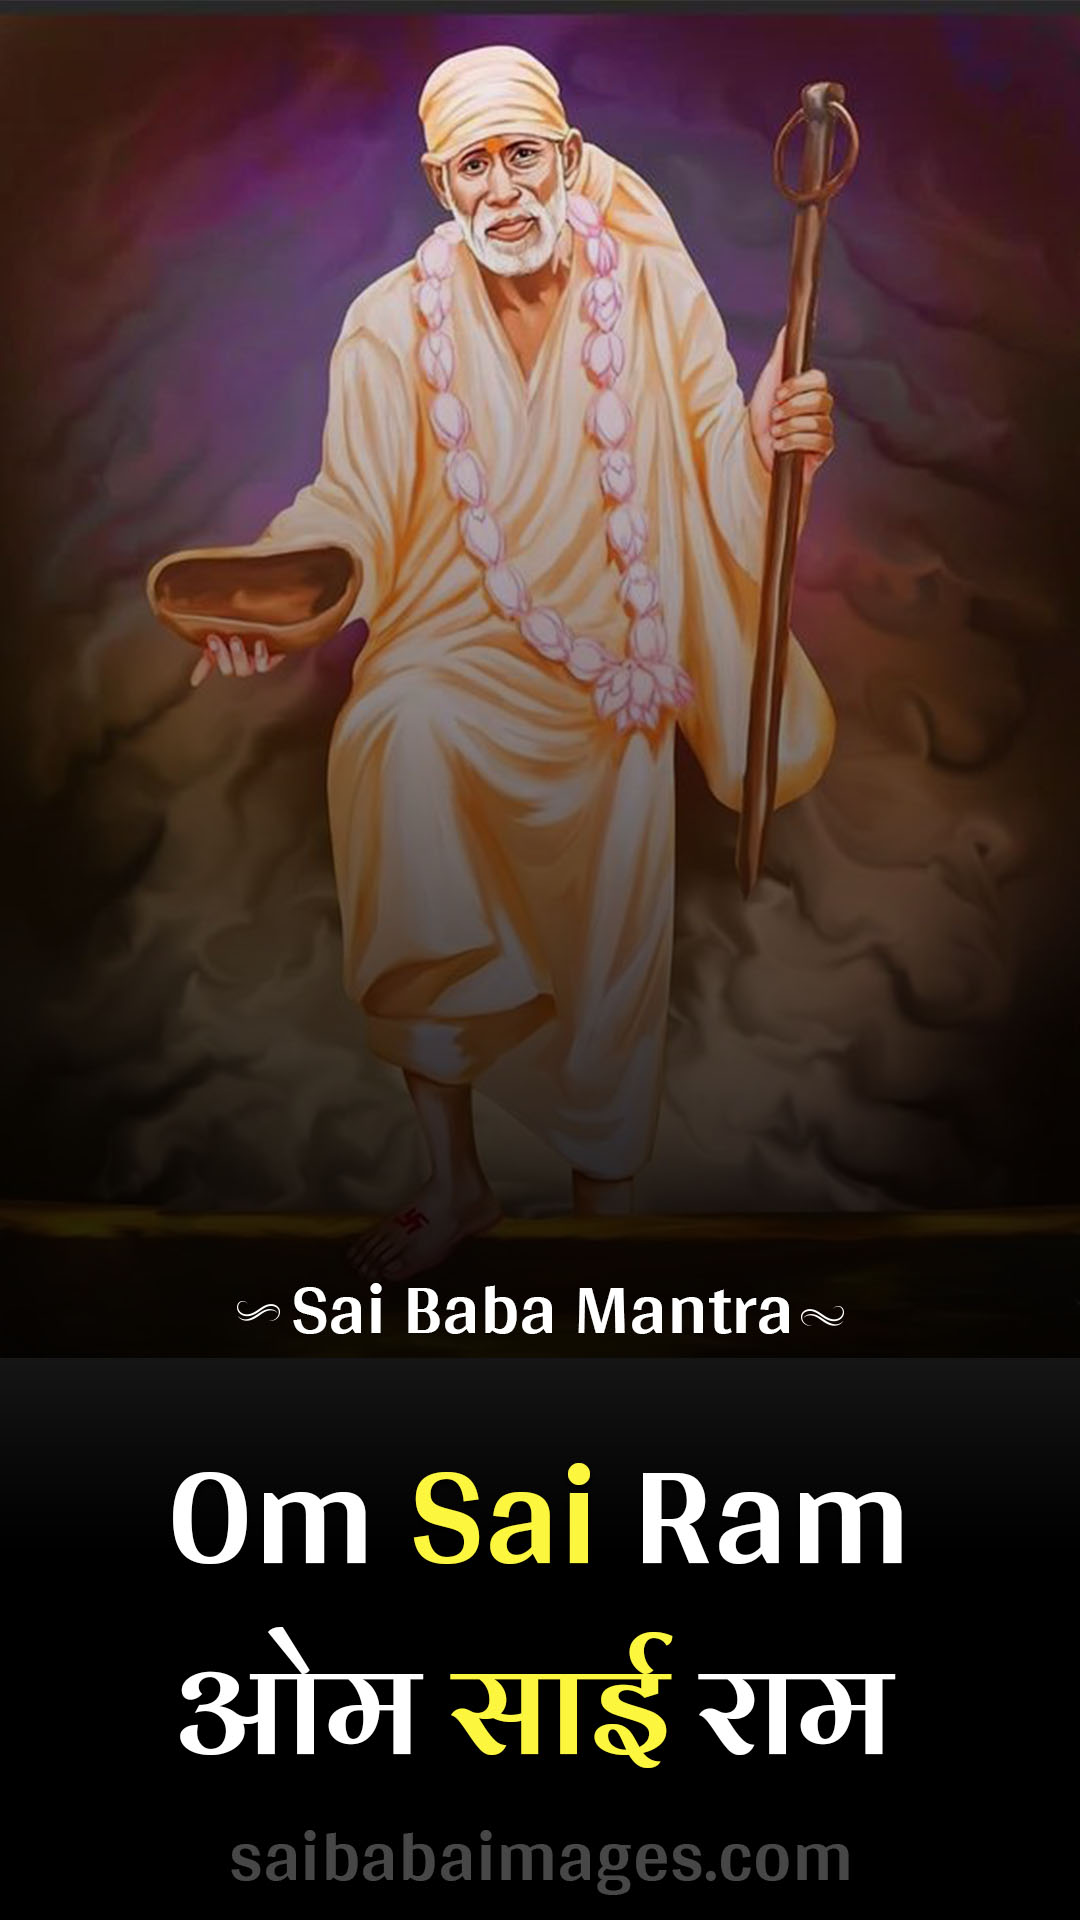 Sai Baba Mantra for Success